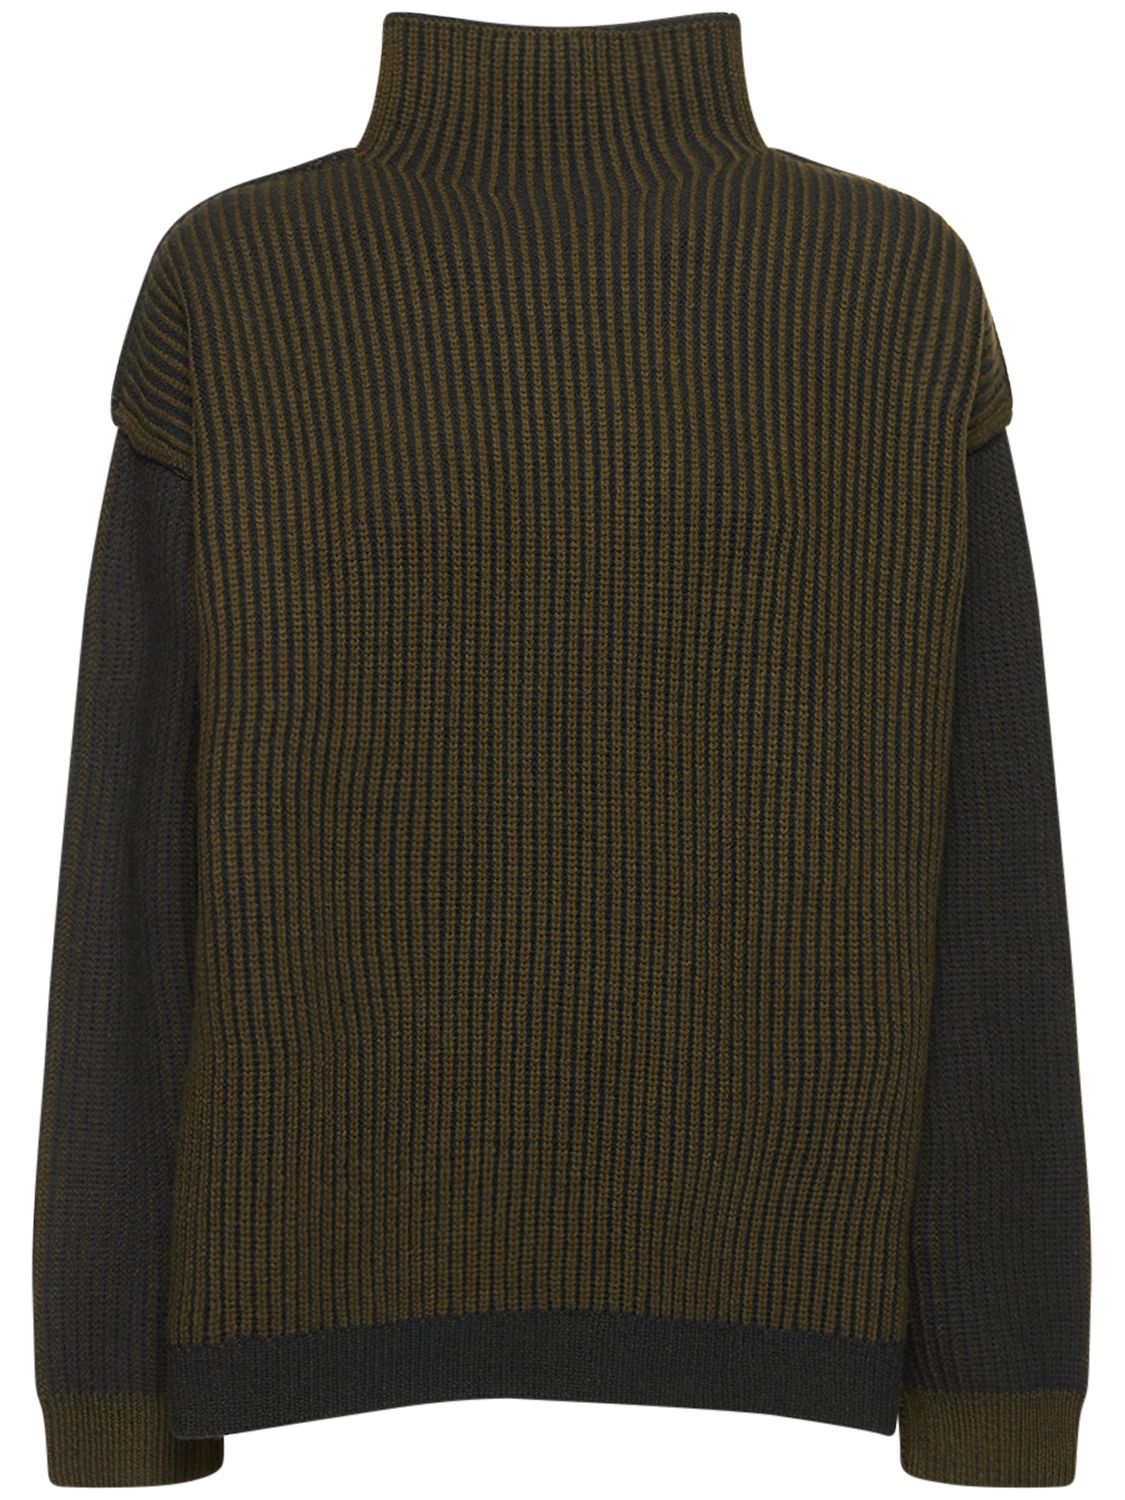 Hinterland Sweater